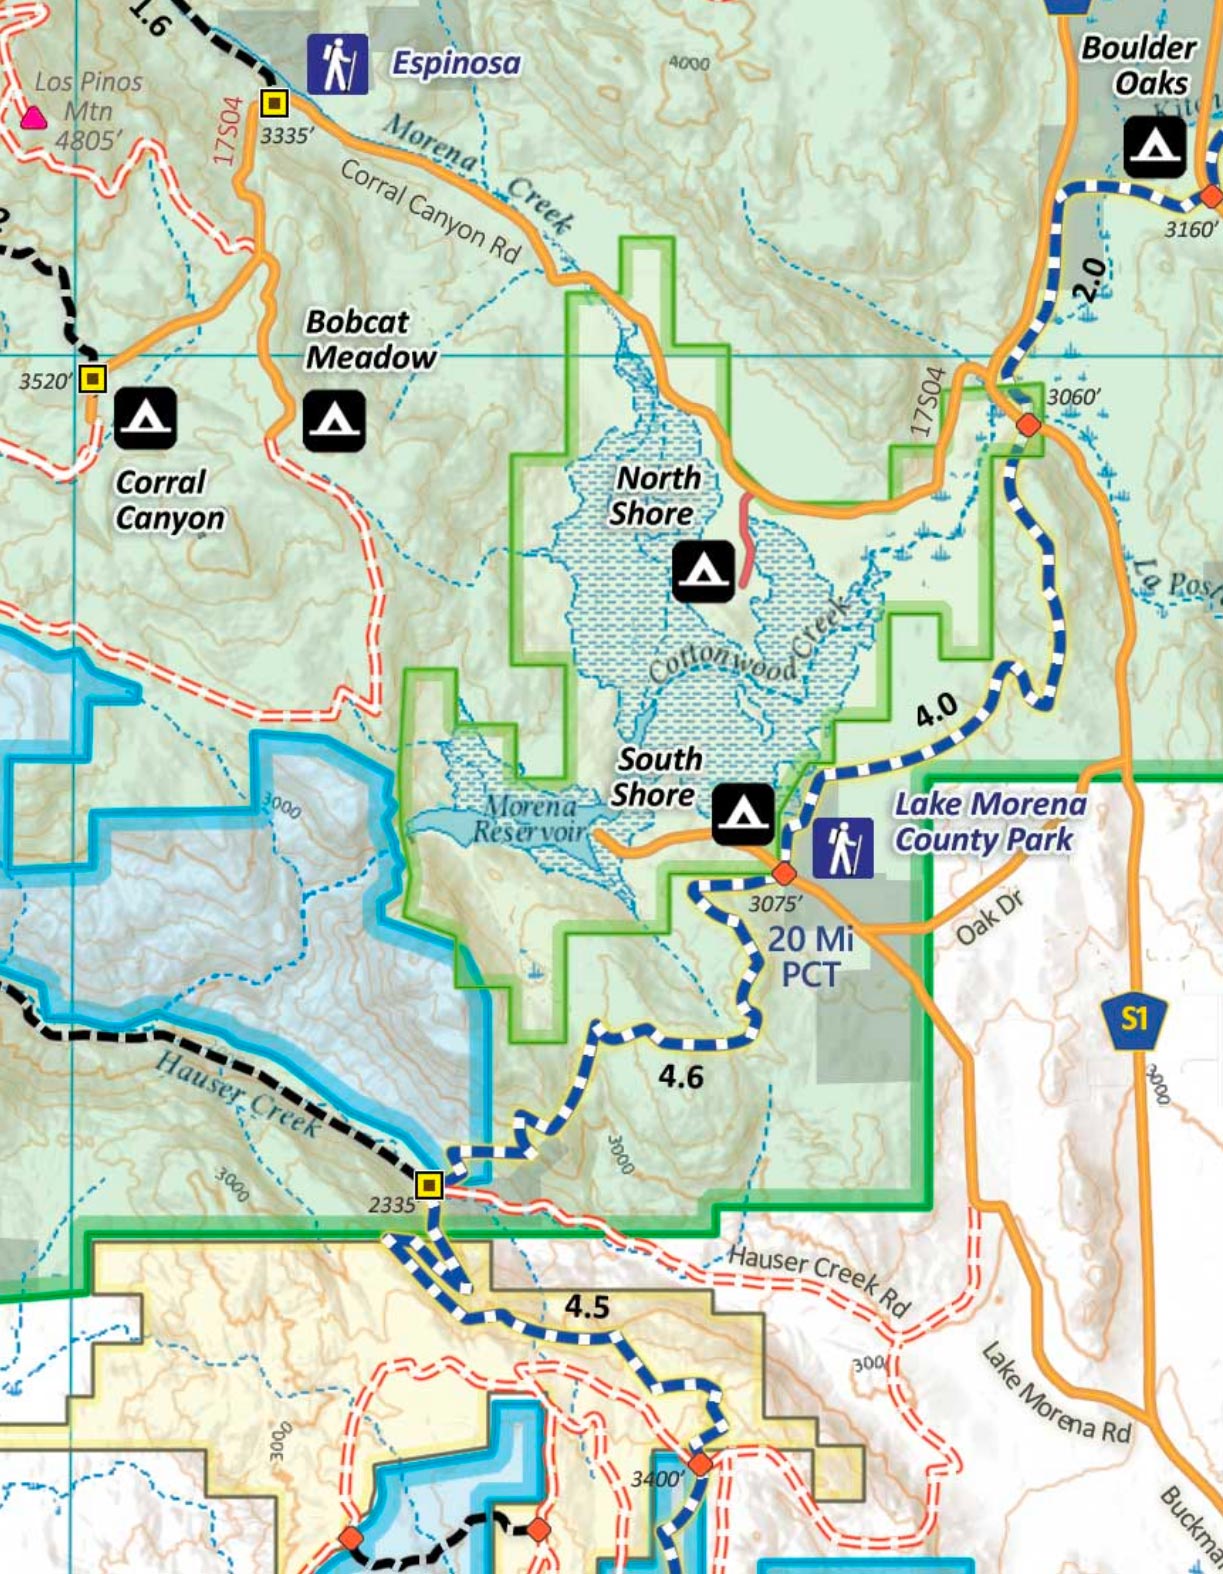 San Diego County Trail Map | Calico Maps inside image